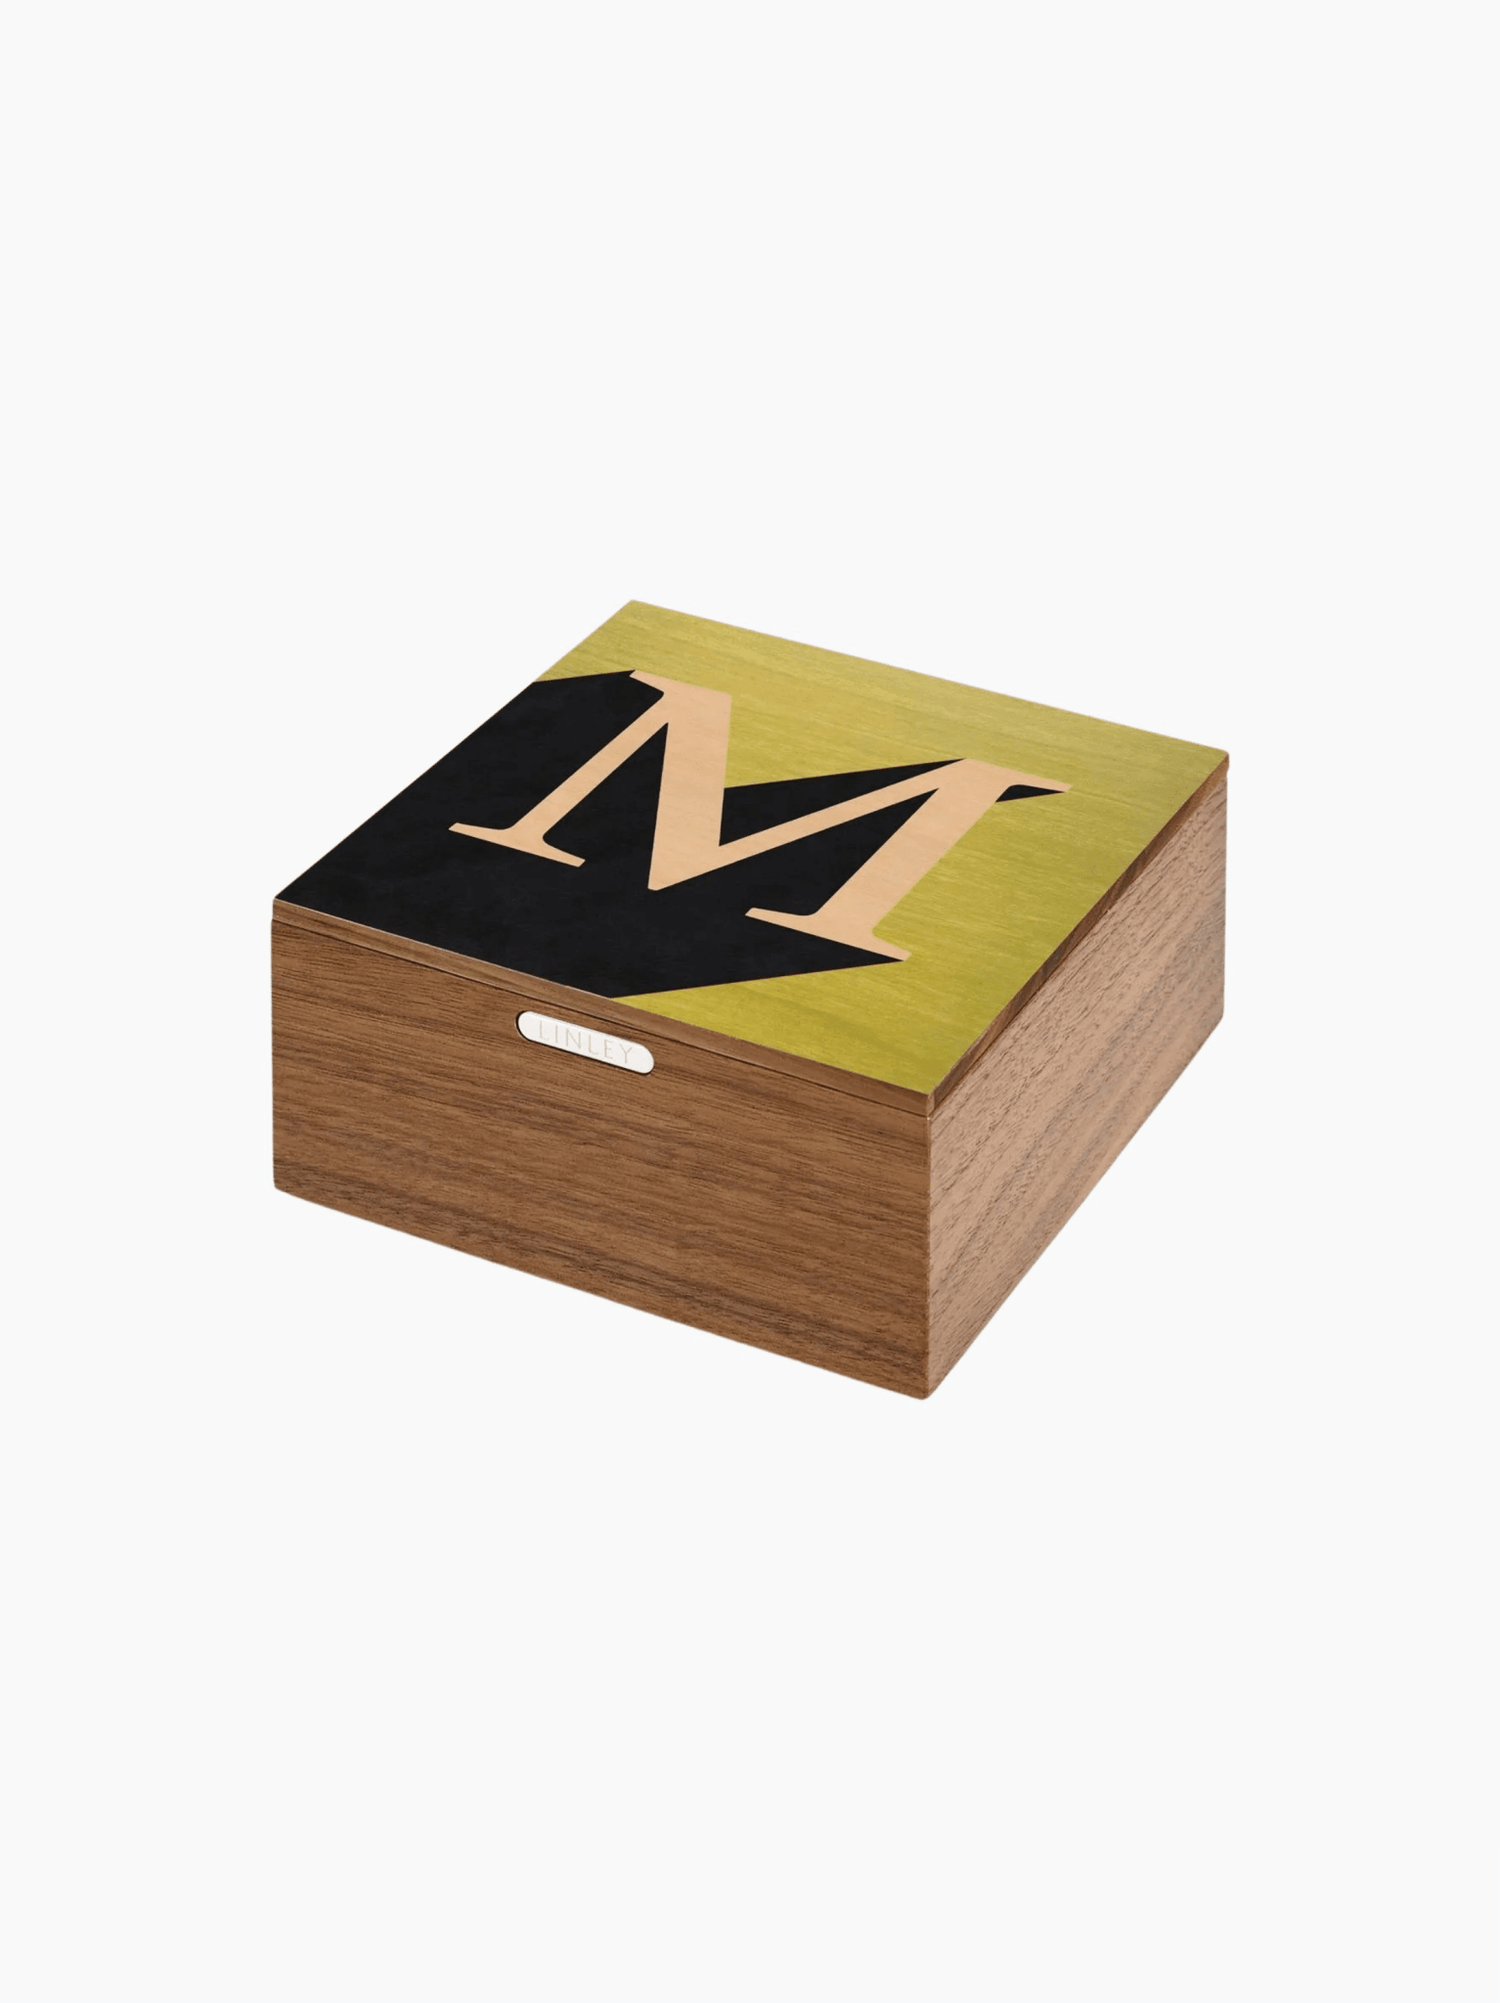 "M" Alphabet Box